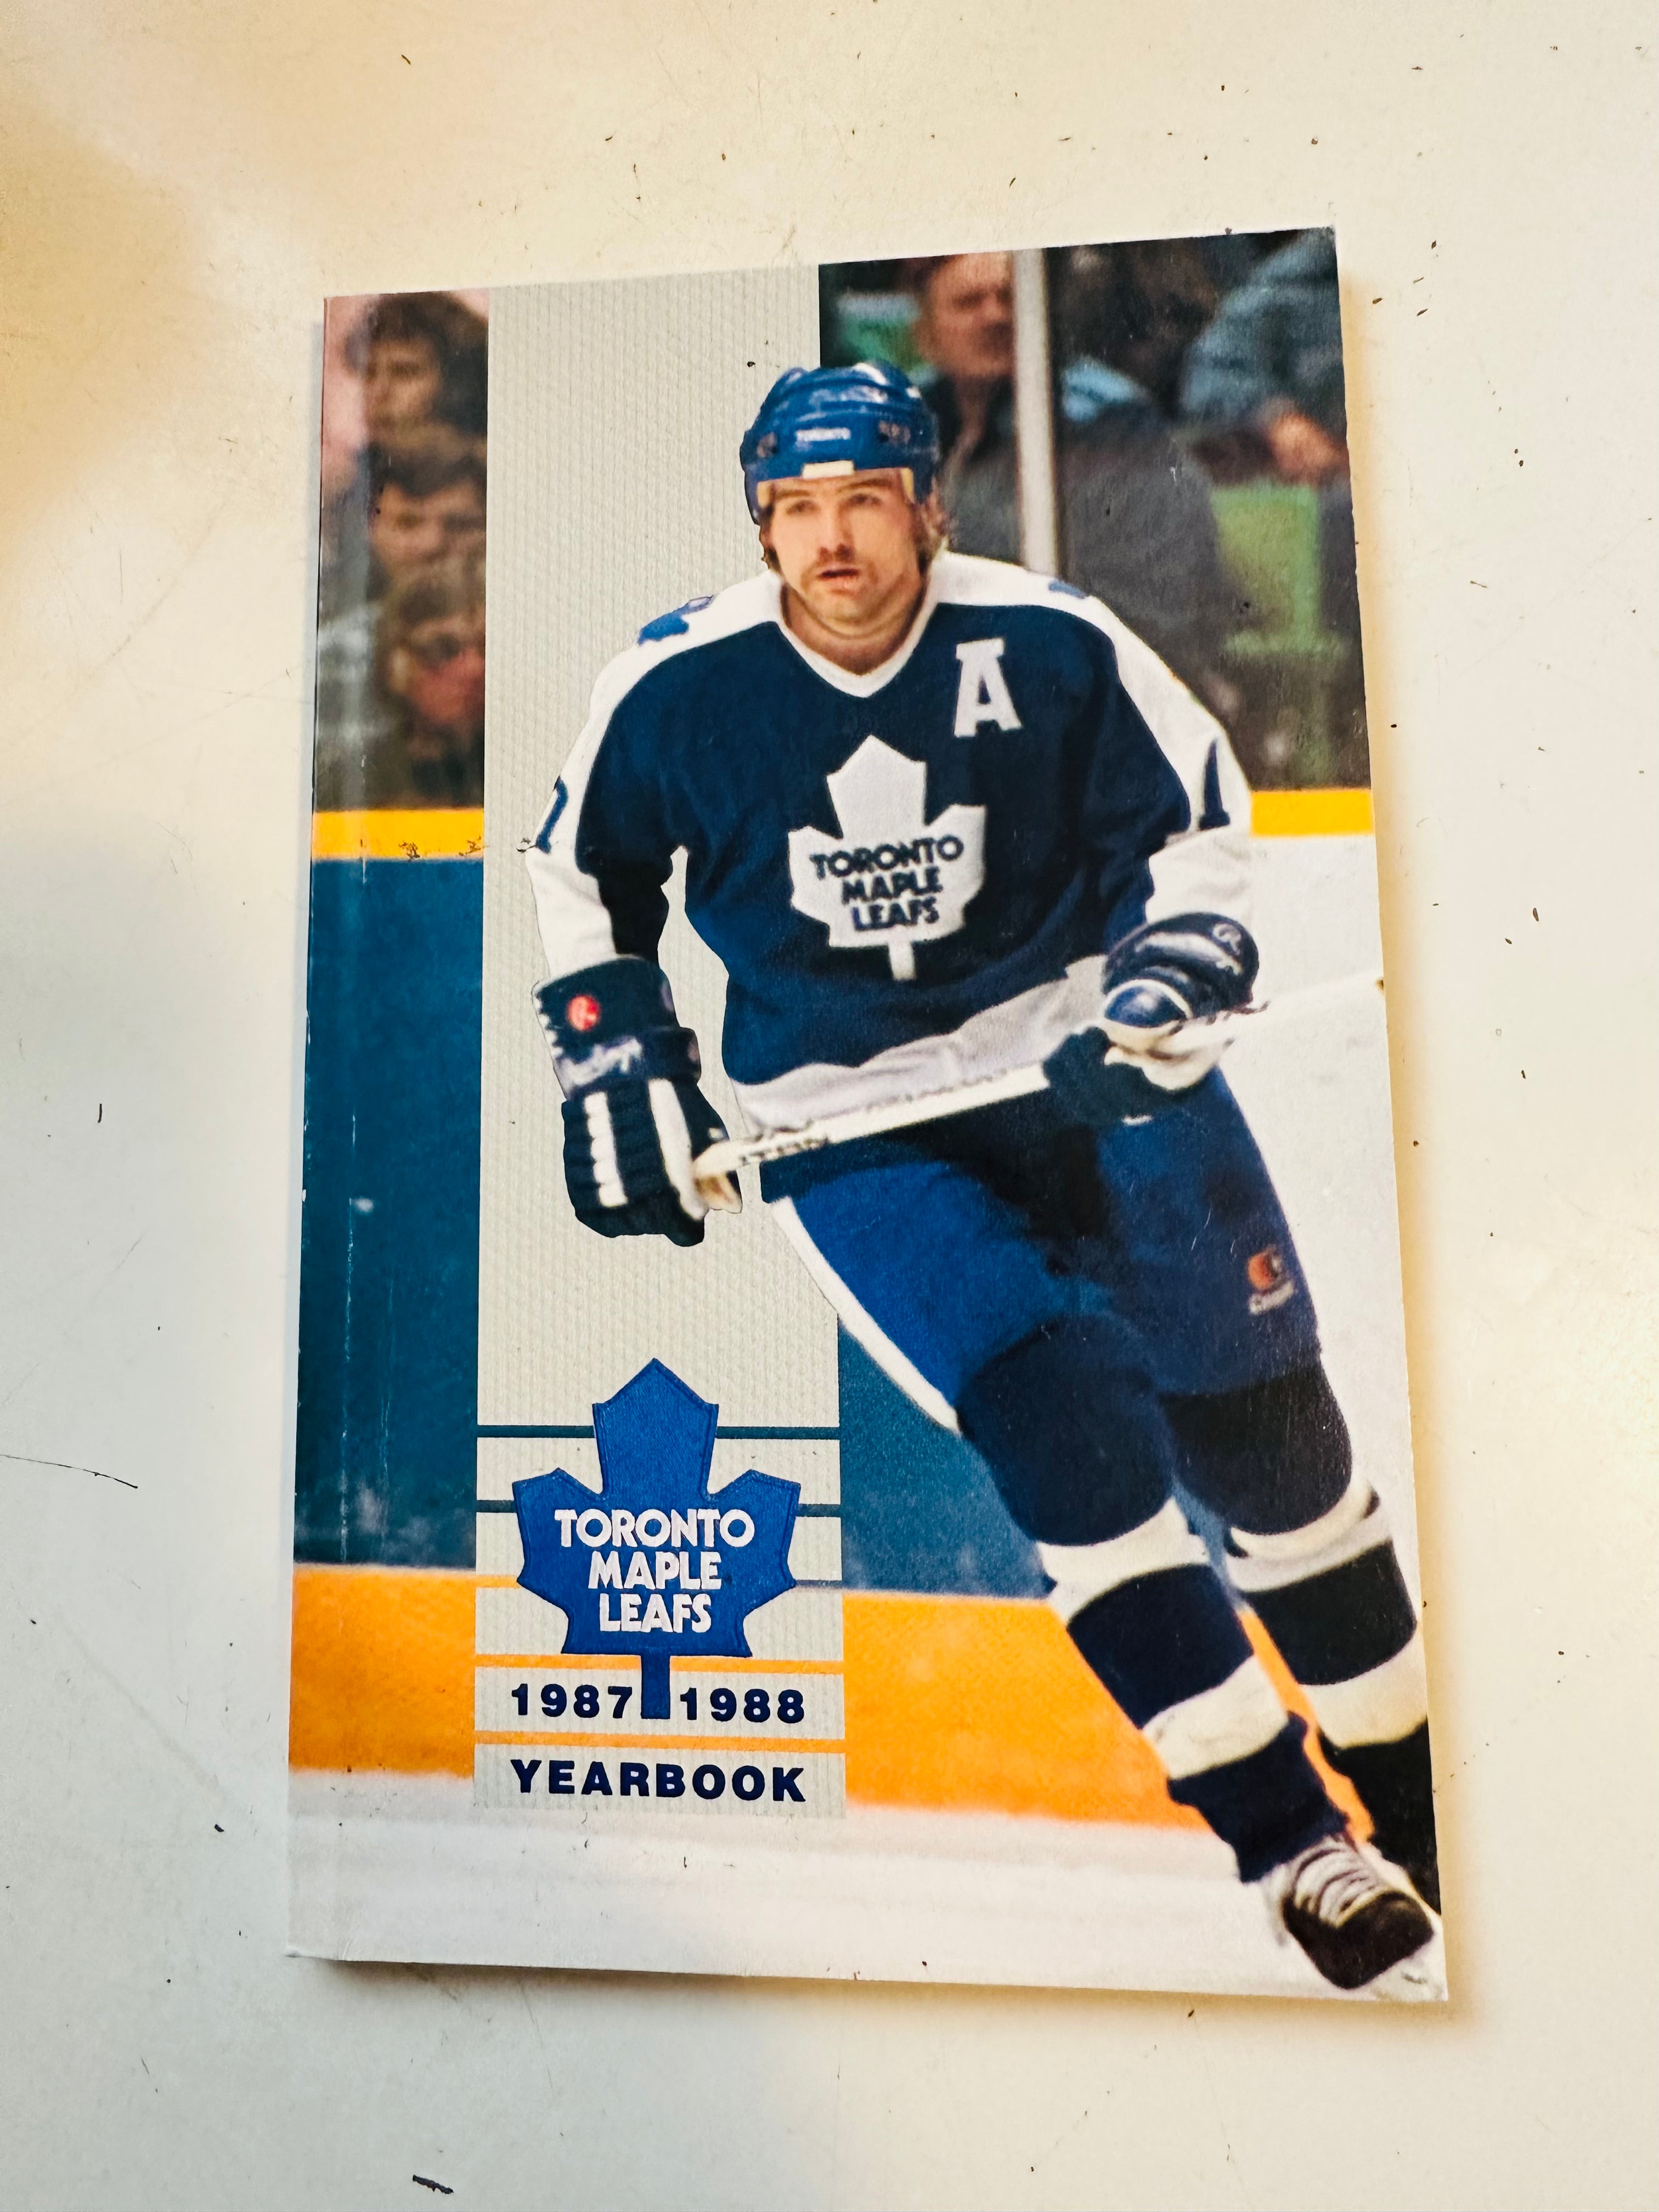 Toronto Maple Leafs hockey yearbook 1987/88